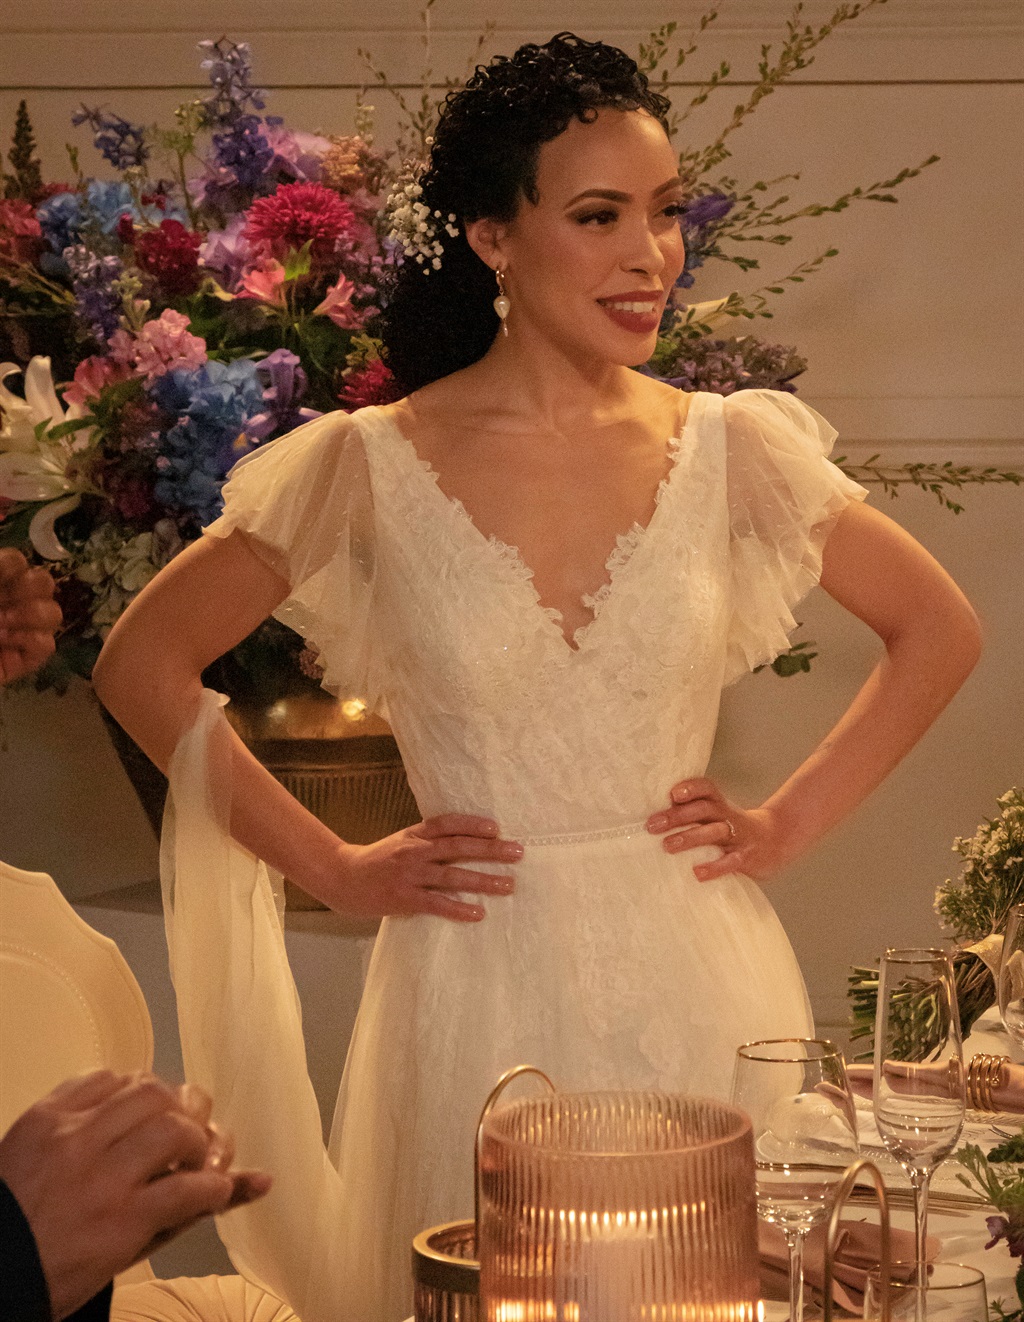 Danni (Vashti Prins) in her wedding dress from Bri